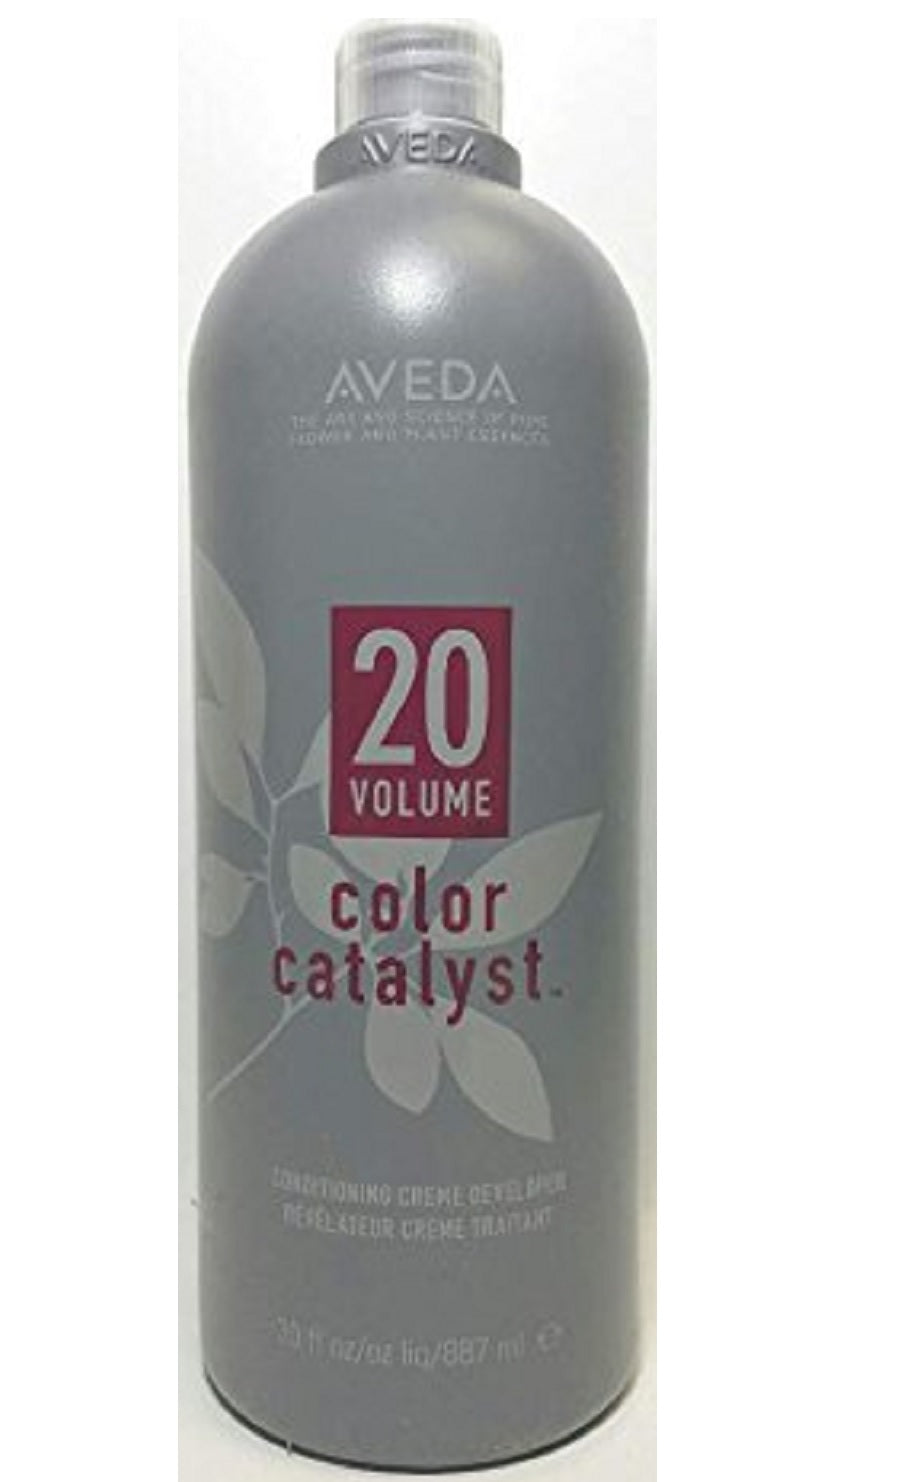 AVEDA Conditioning Creme Volume 20 DEVELOPER COLOR CATALYST 30oz permanent